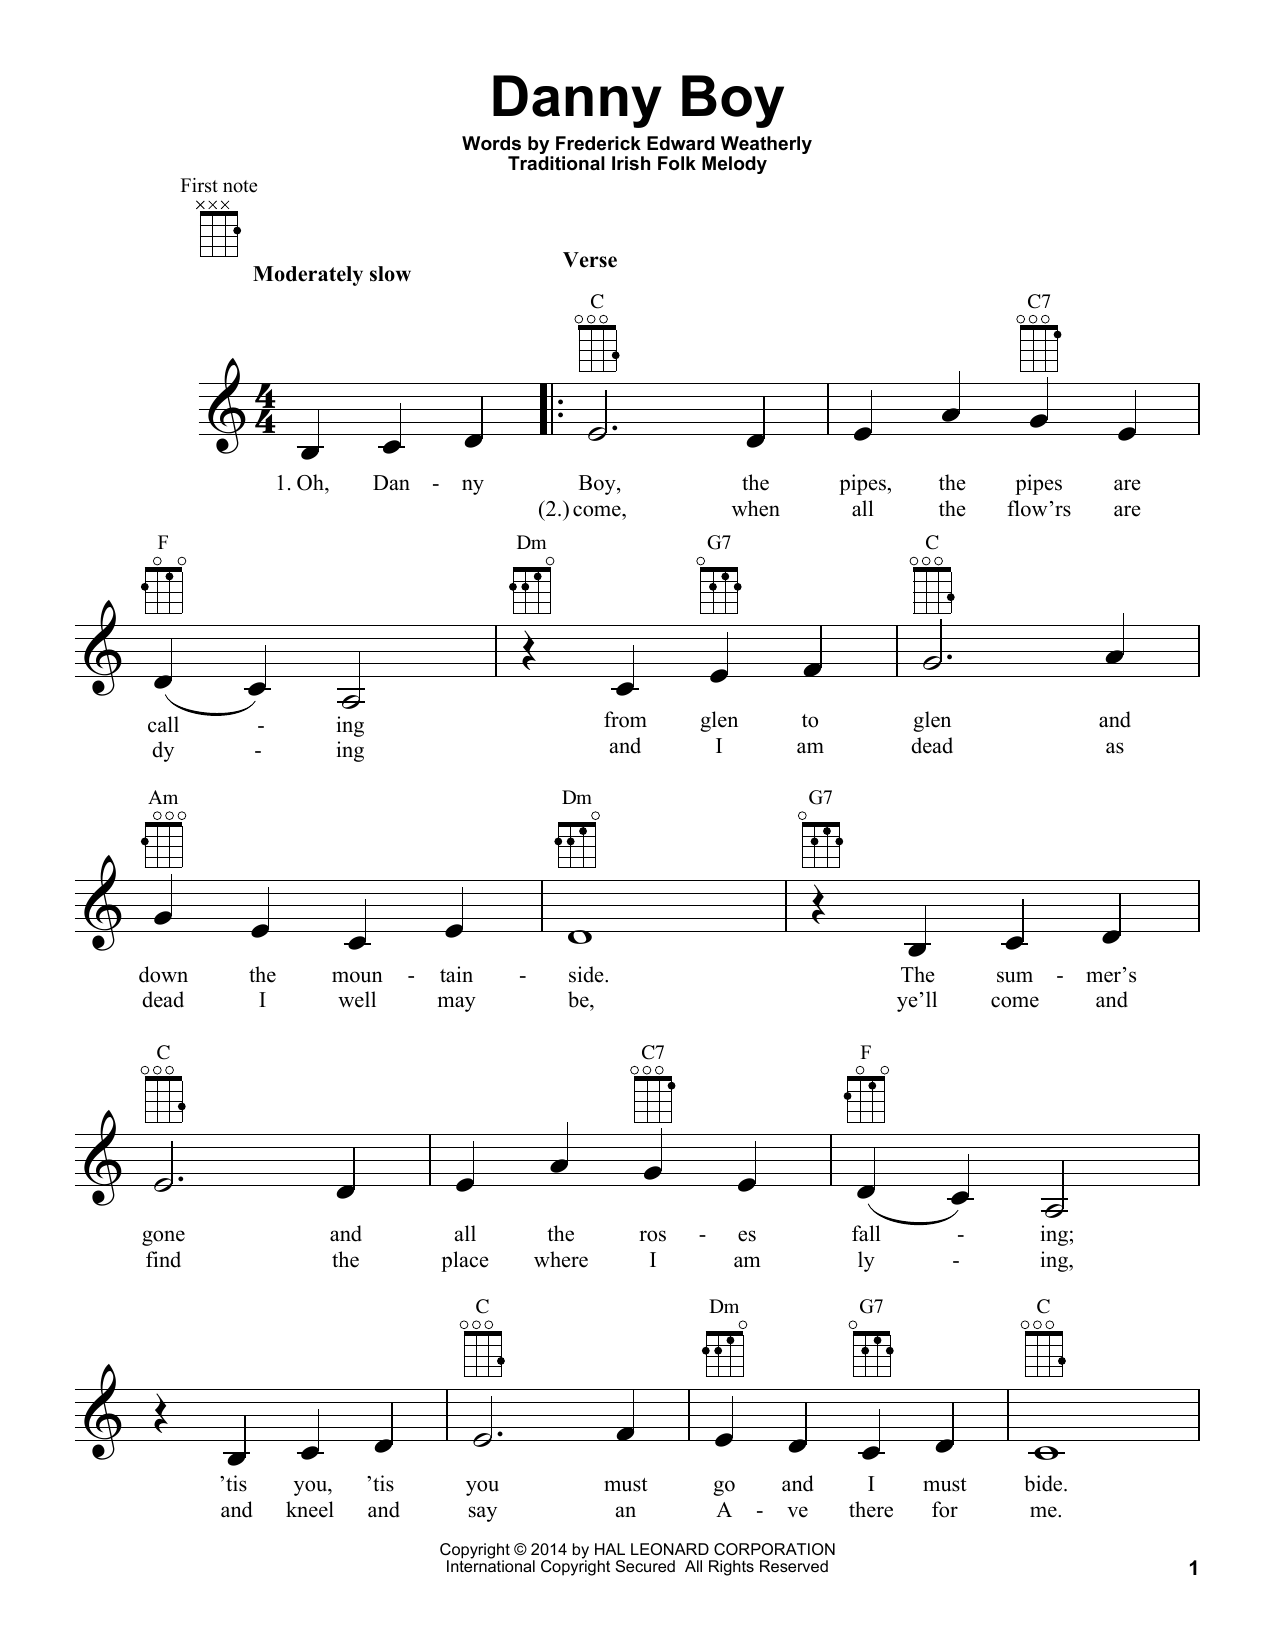 Traditional Irish Danny Boy Sheet Music Notes & Chords for Banjo - Download or Print PDF